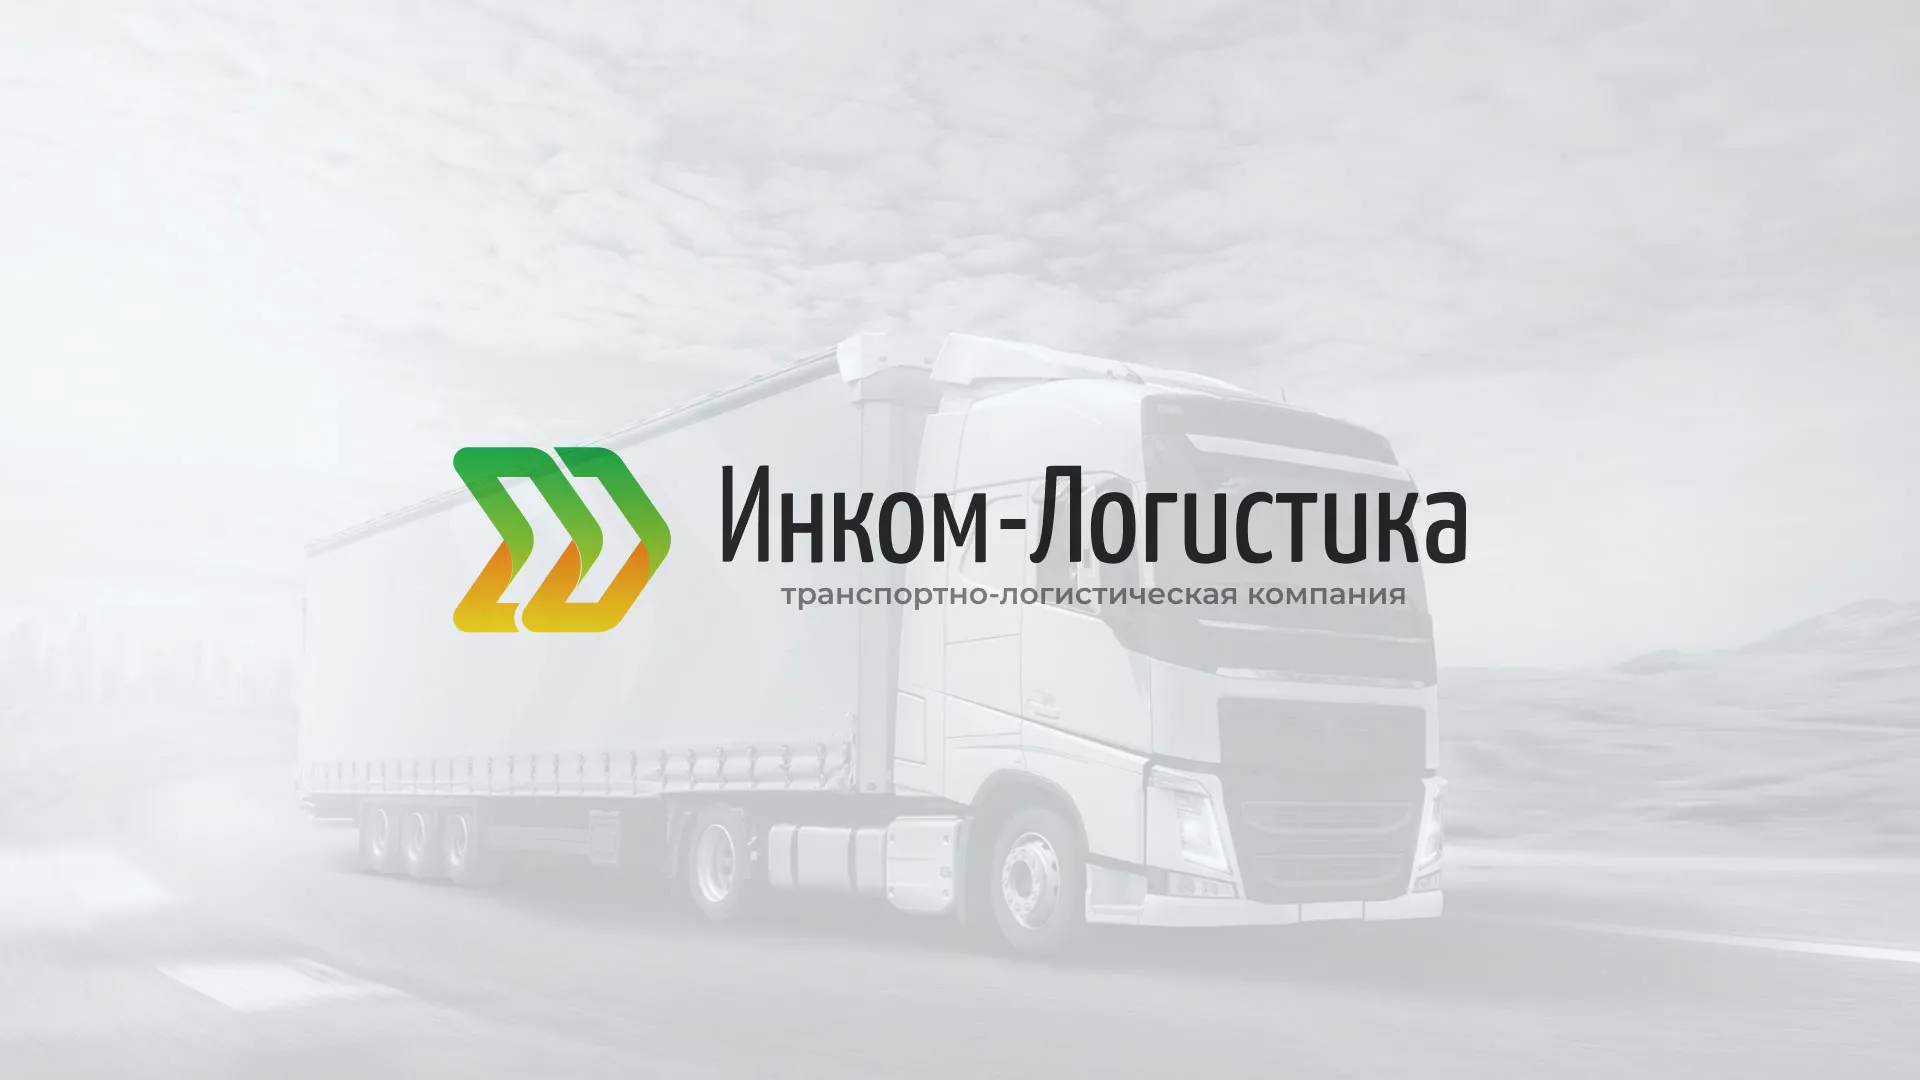 Разработка логотипа и сайта компании «Инком-Логистика» в Звенигово